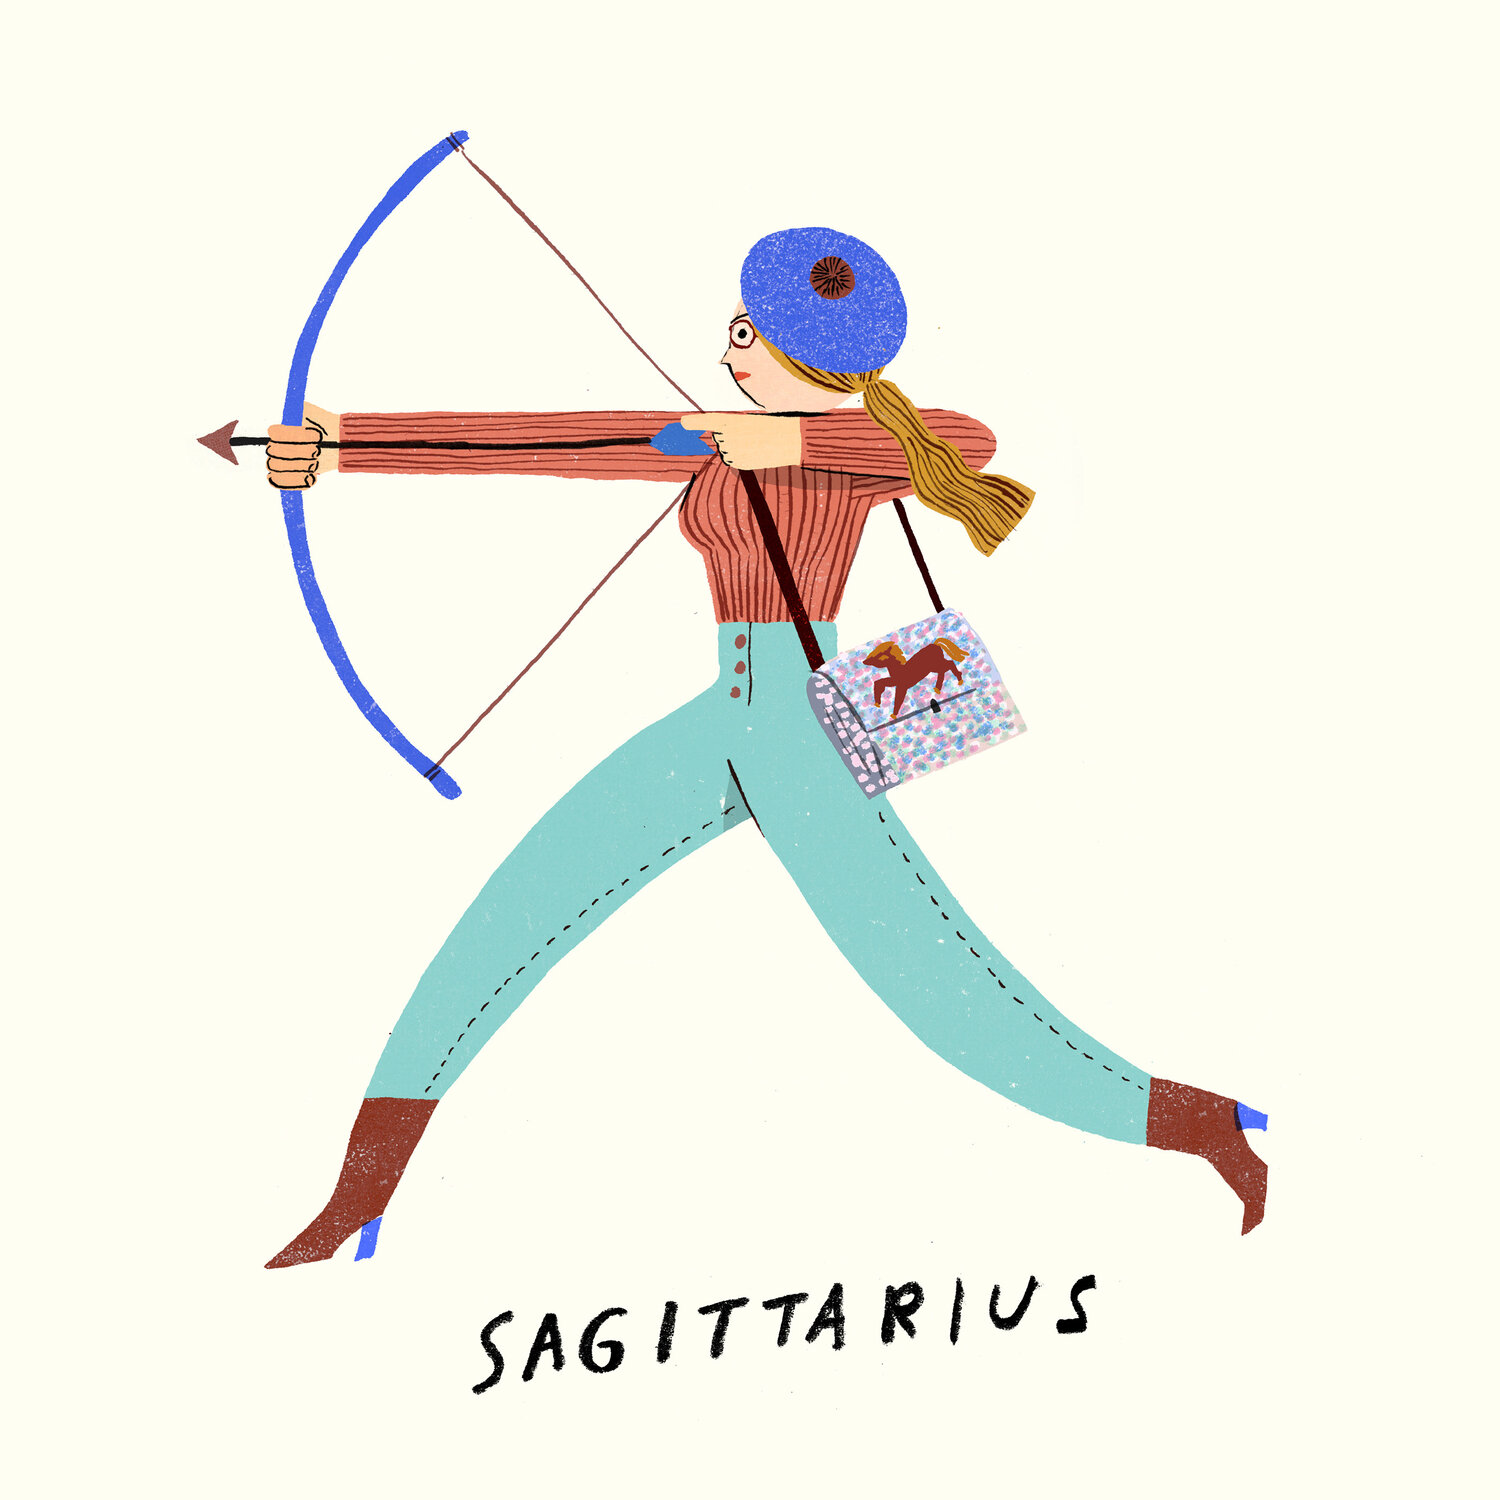 Sagittarius artwork by Yeji Yun on behance via pinterest.